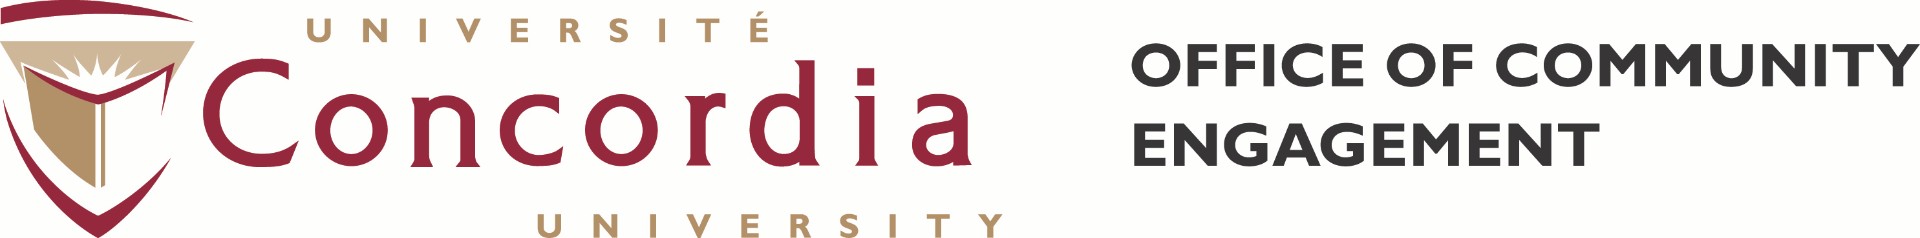 Concordia-Logo-Sidestacked